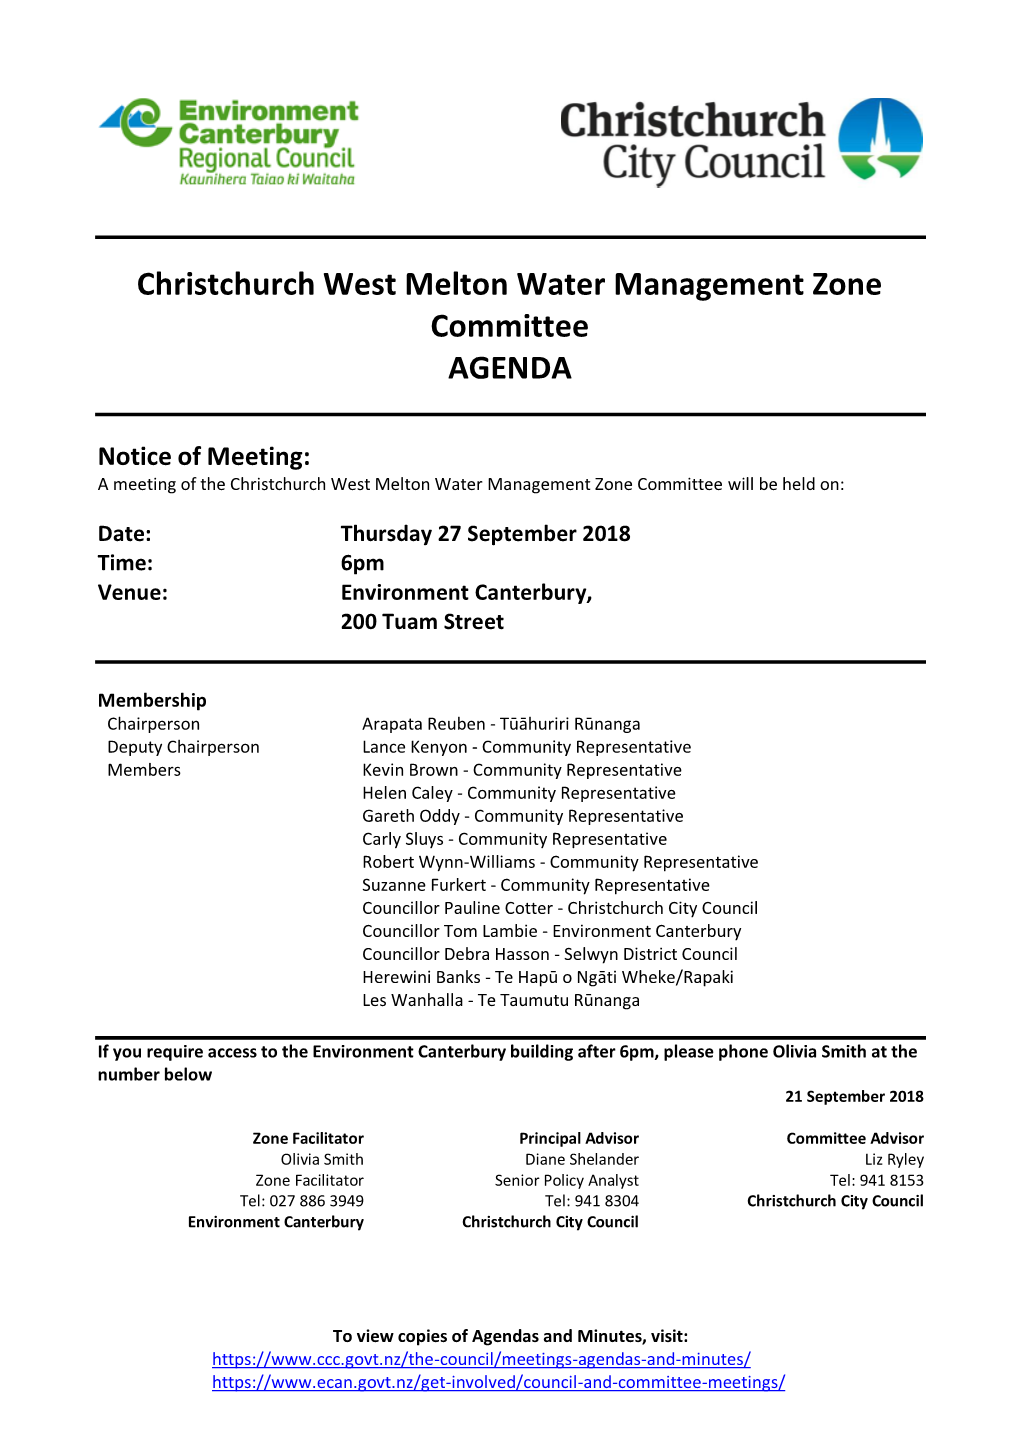 Agenda of Christchurch West Melton Water Management Zone